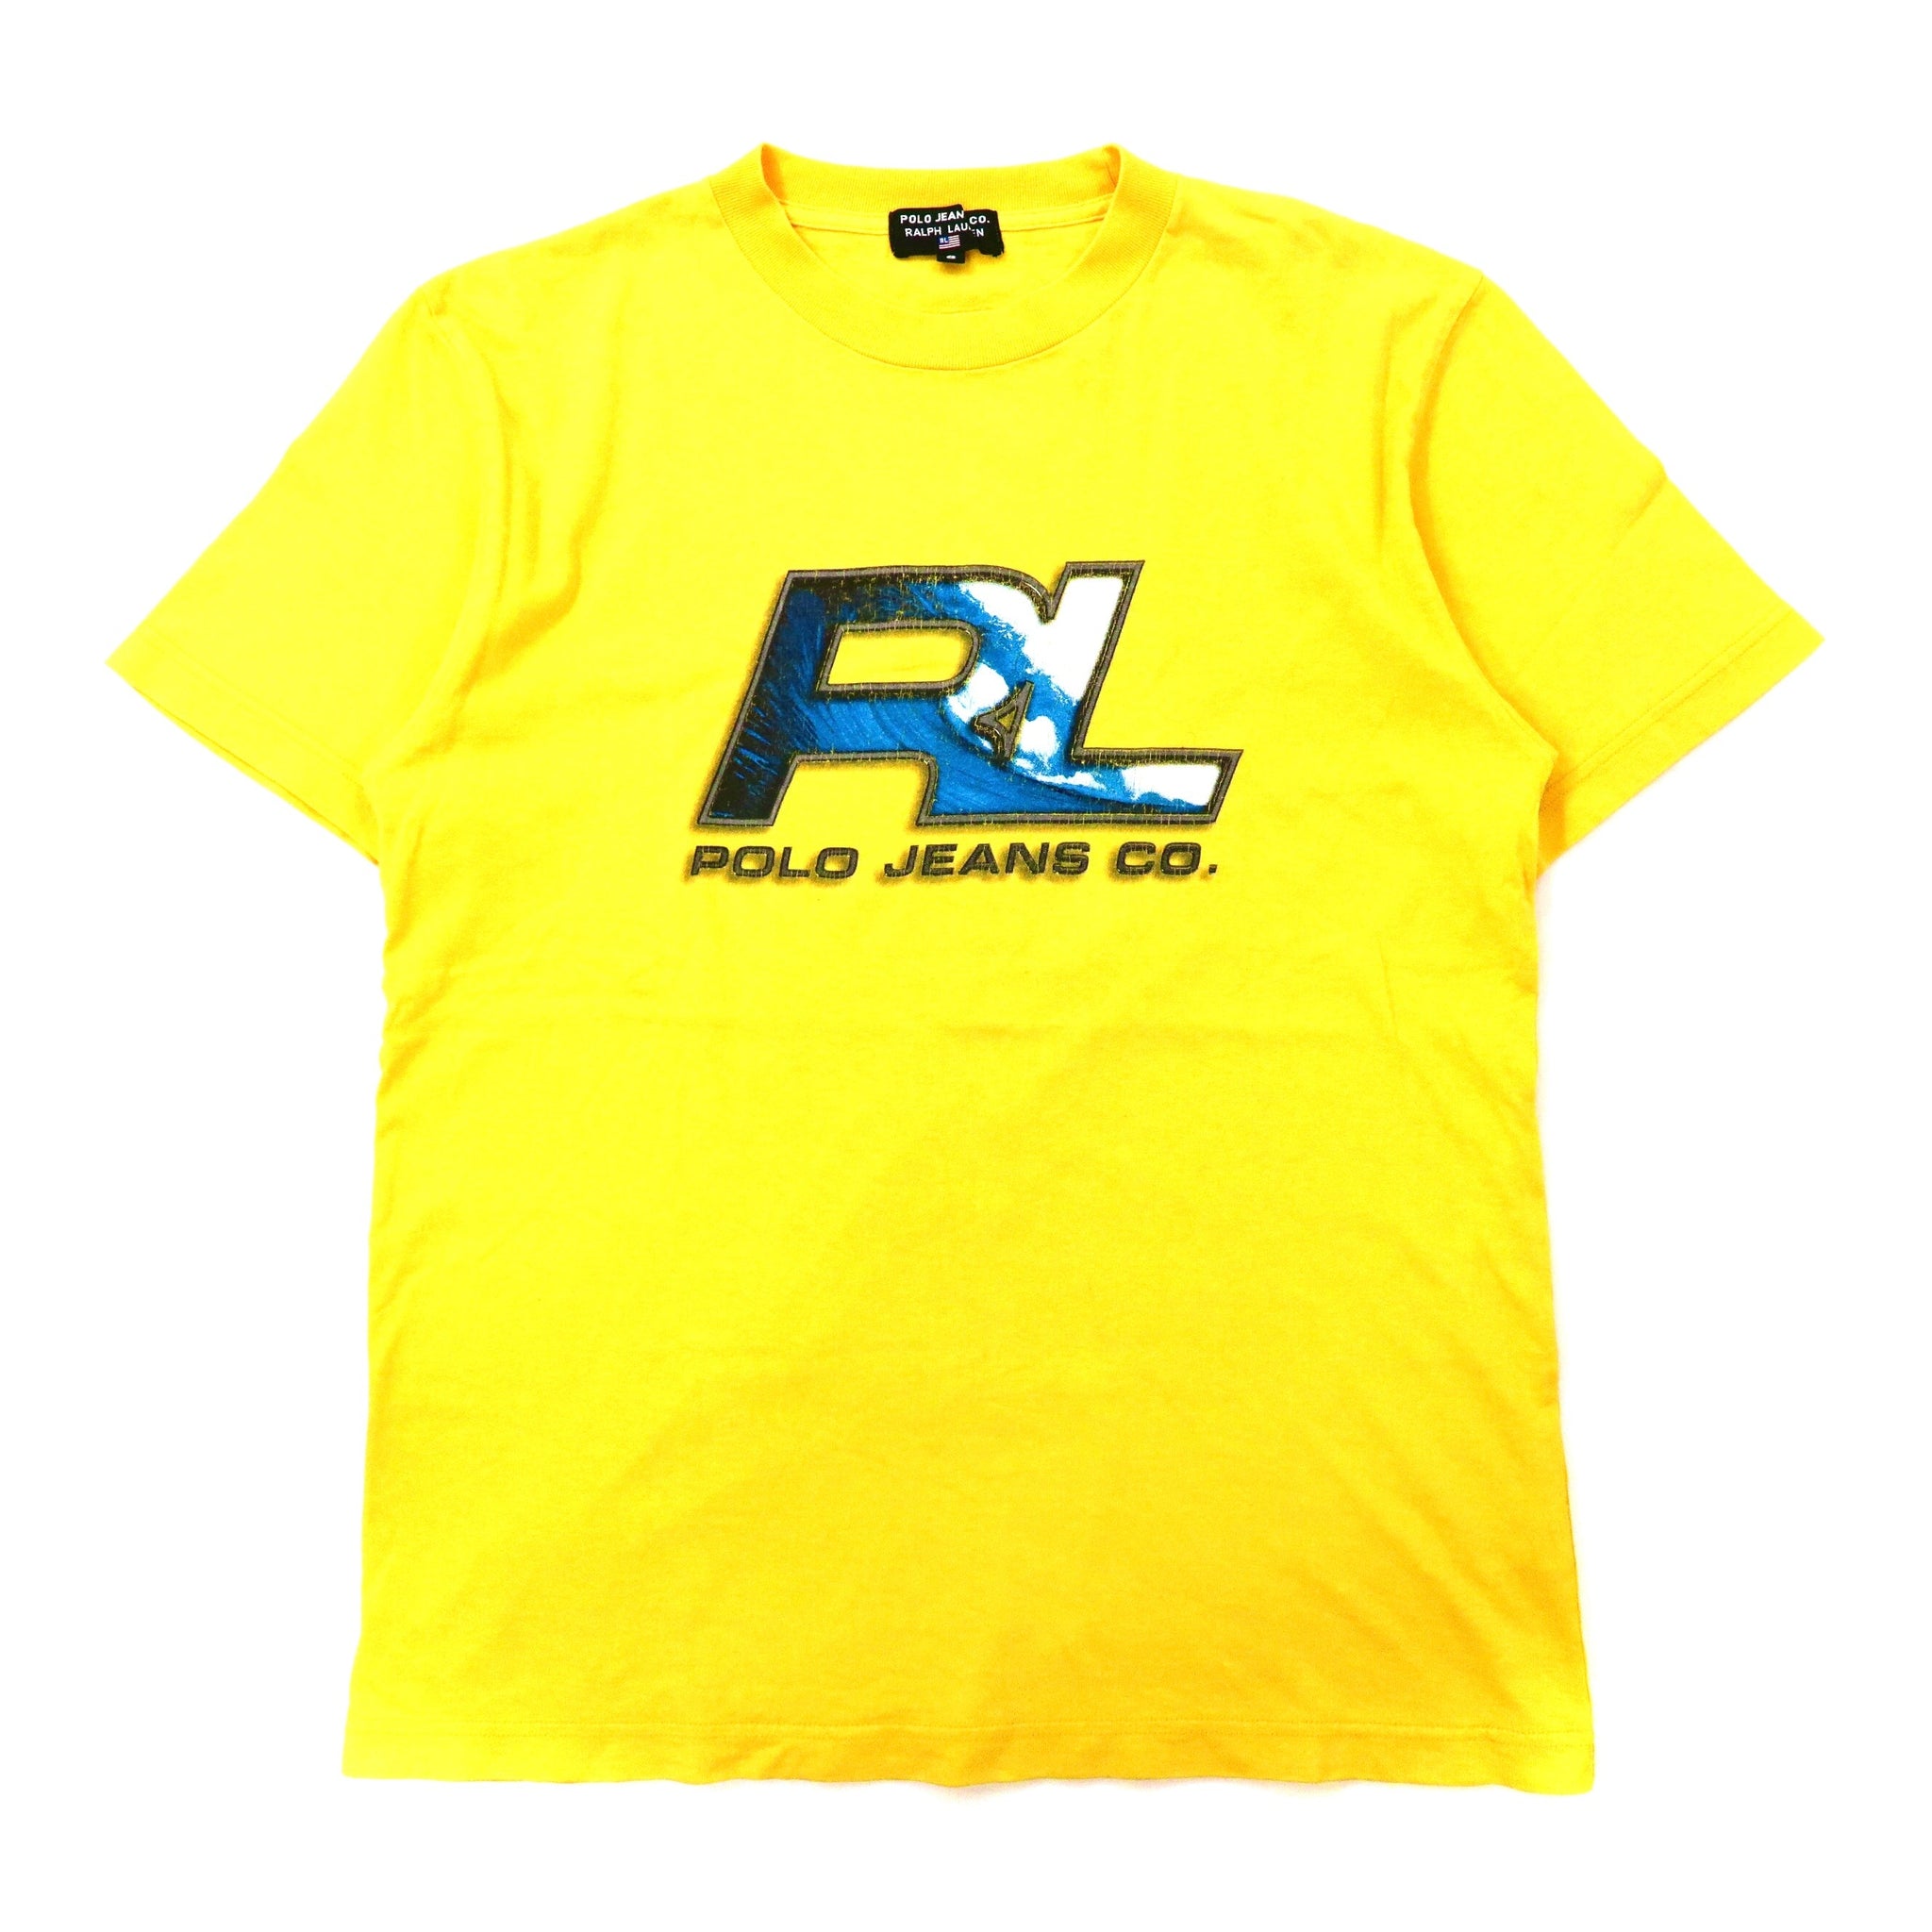 POLO JEANS CO. RALPH  LAUREN ロゴプリントTシャツ S イエロー コットン 90年代